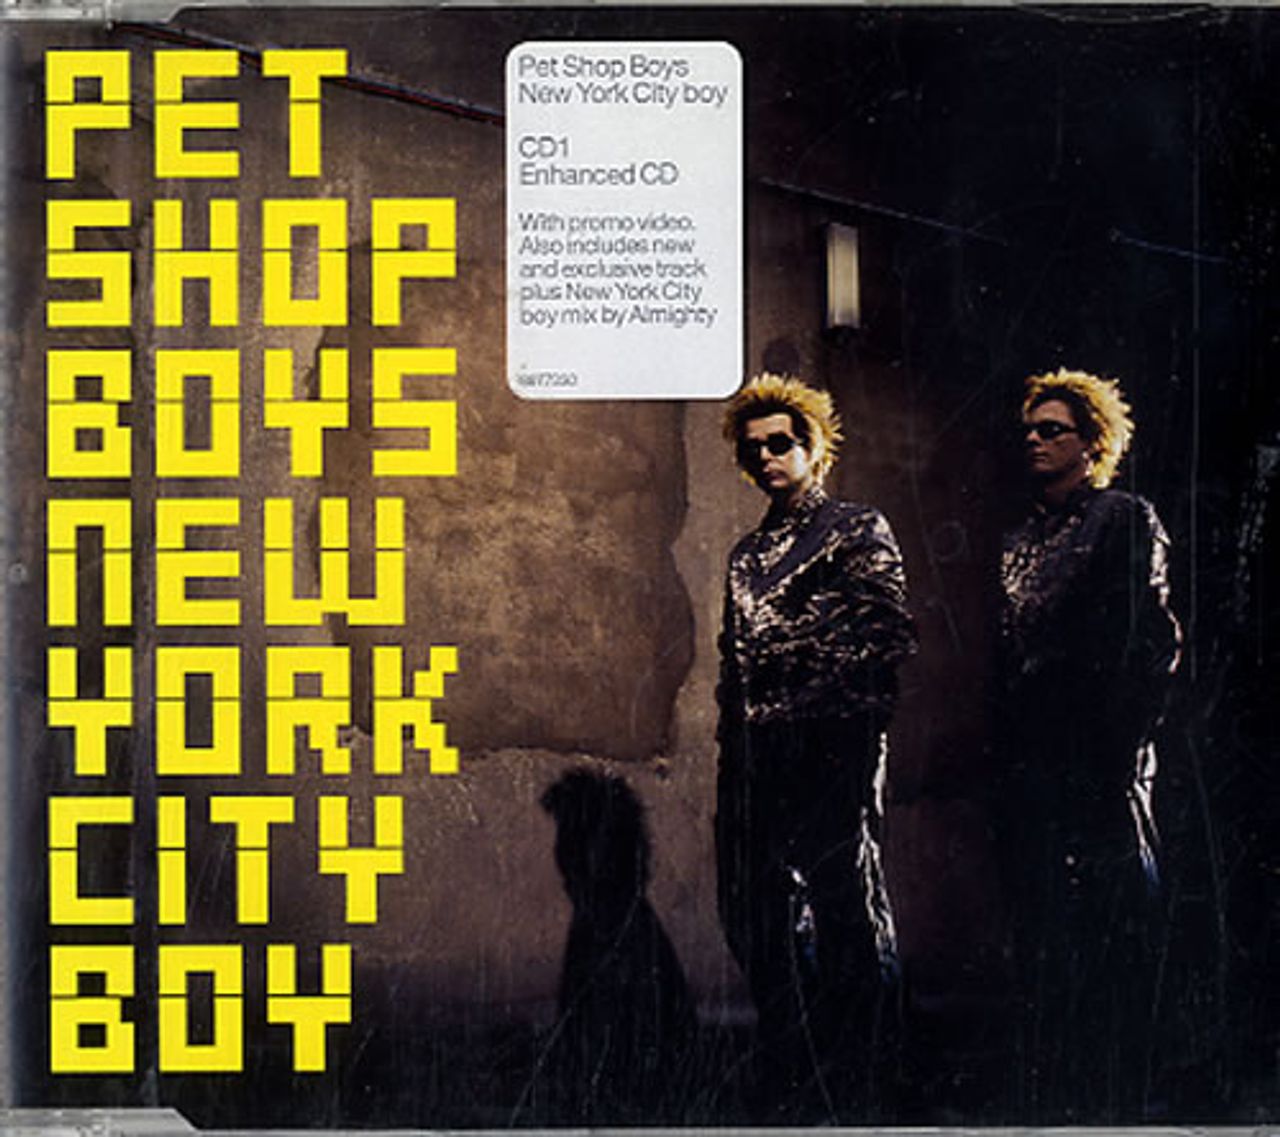 Pet Shop Boys New York City Boy UK single set — RareVinyl.com